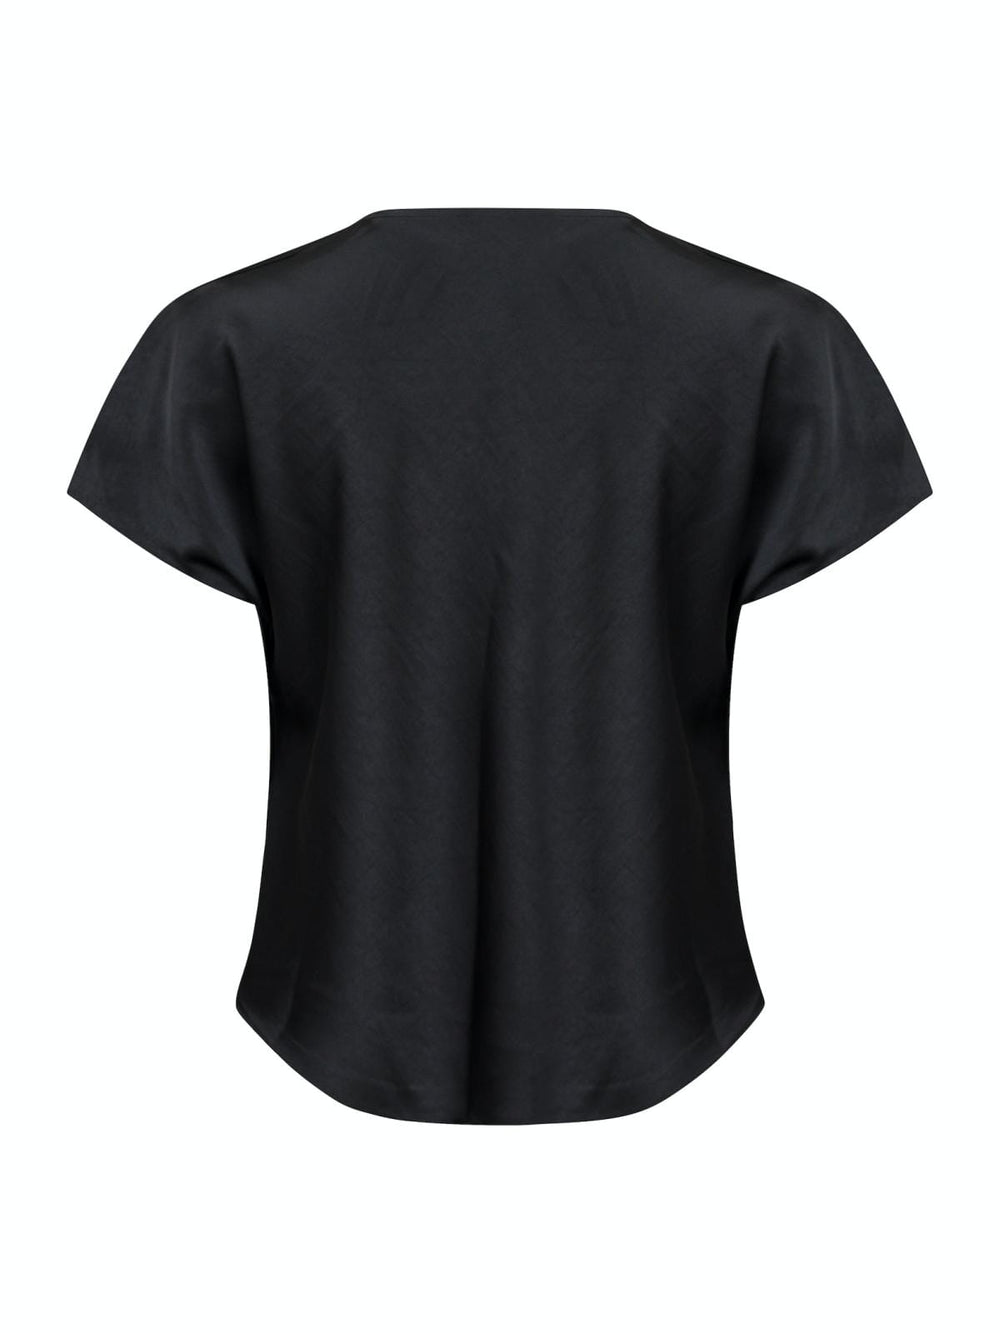 Neo Noir - Annabeth Heavy Steen Tee - Black T-shirts 